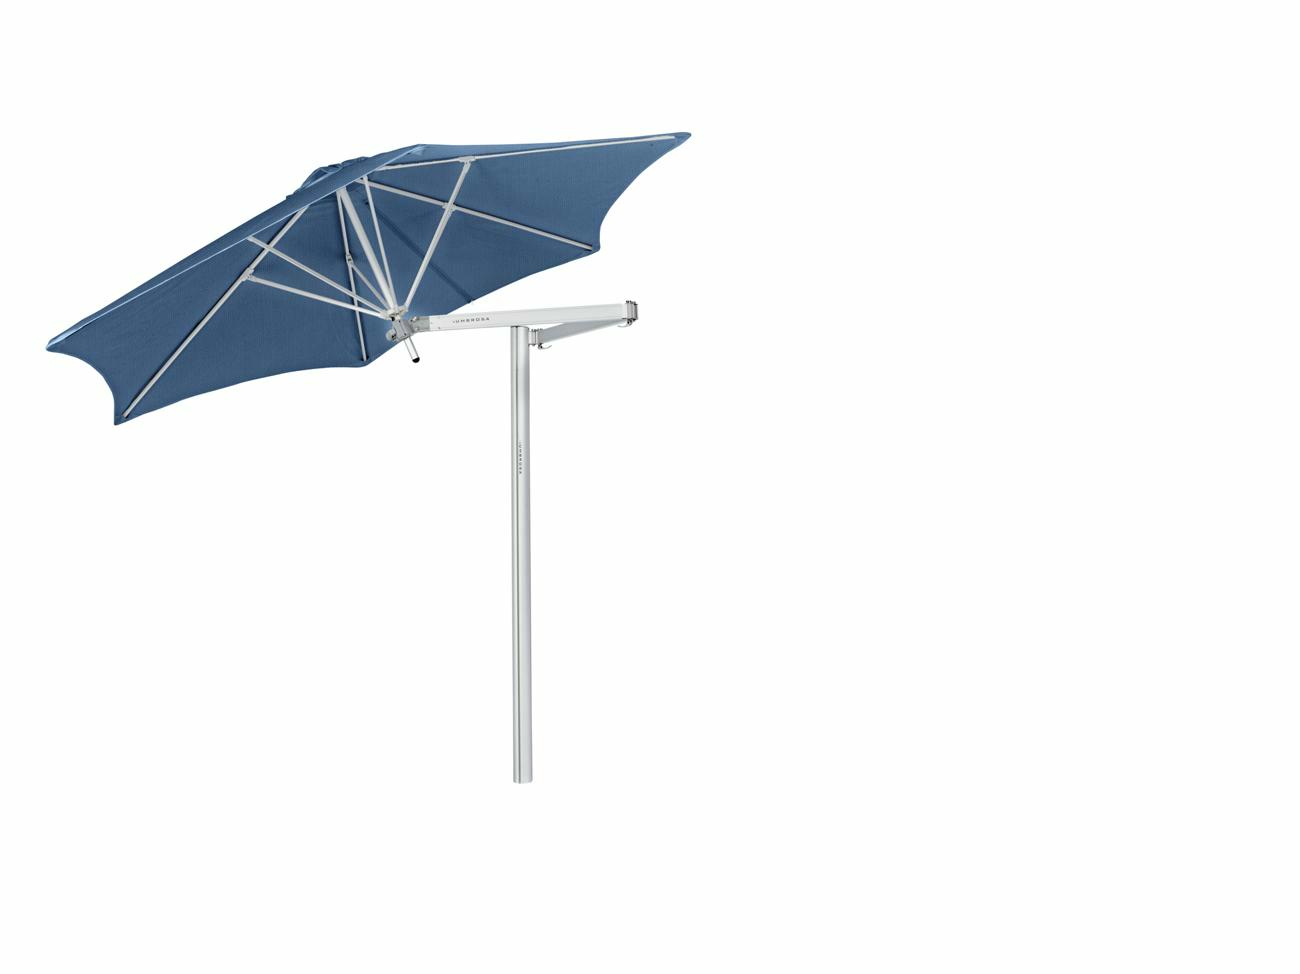 Paraflex cantilever umbrella round 2,7 m with Blue Storm fabric and a Classic arm